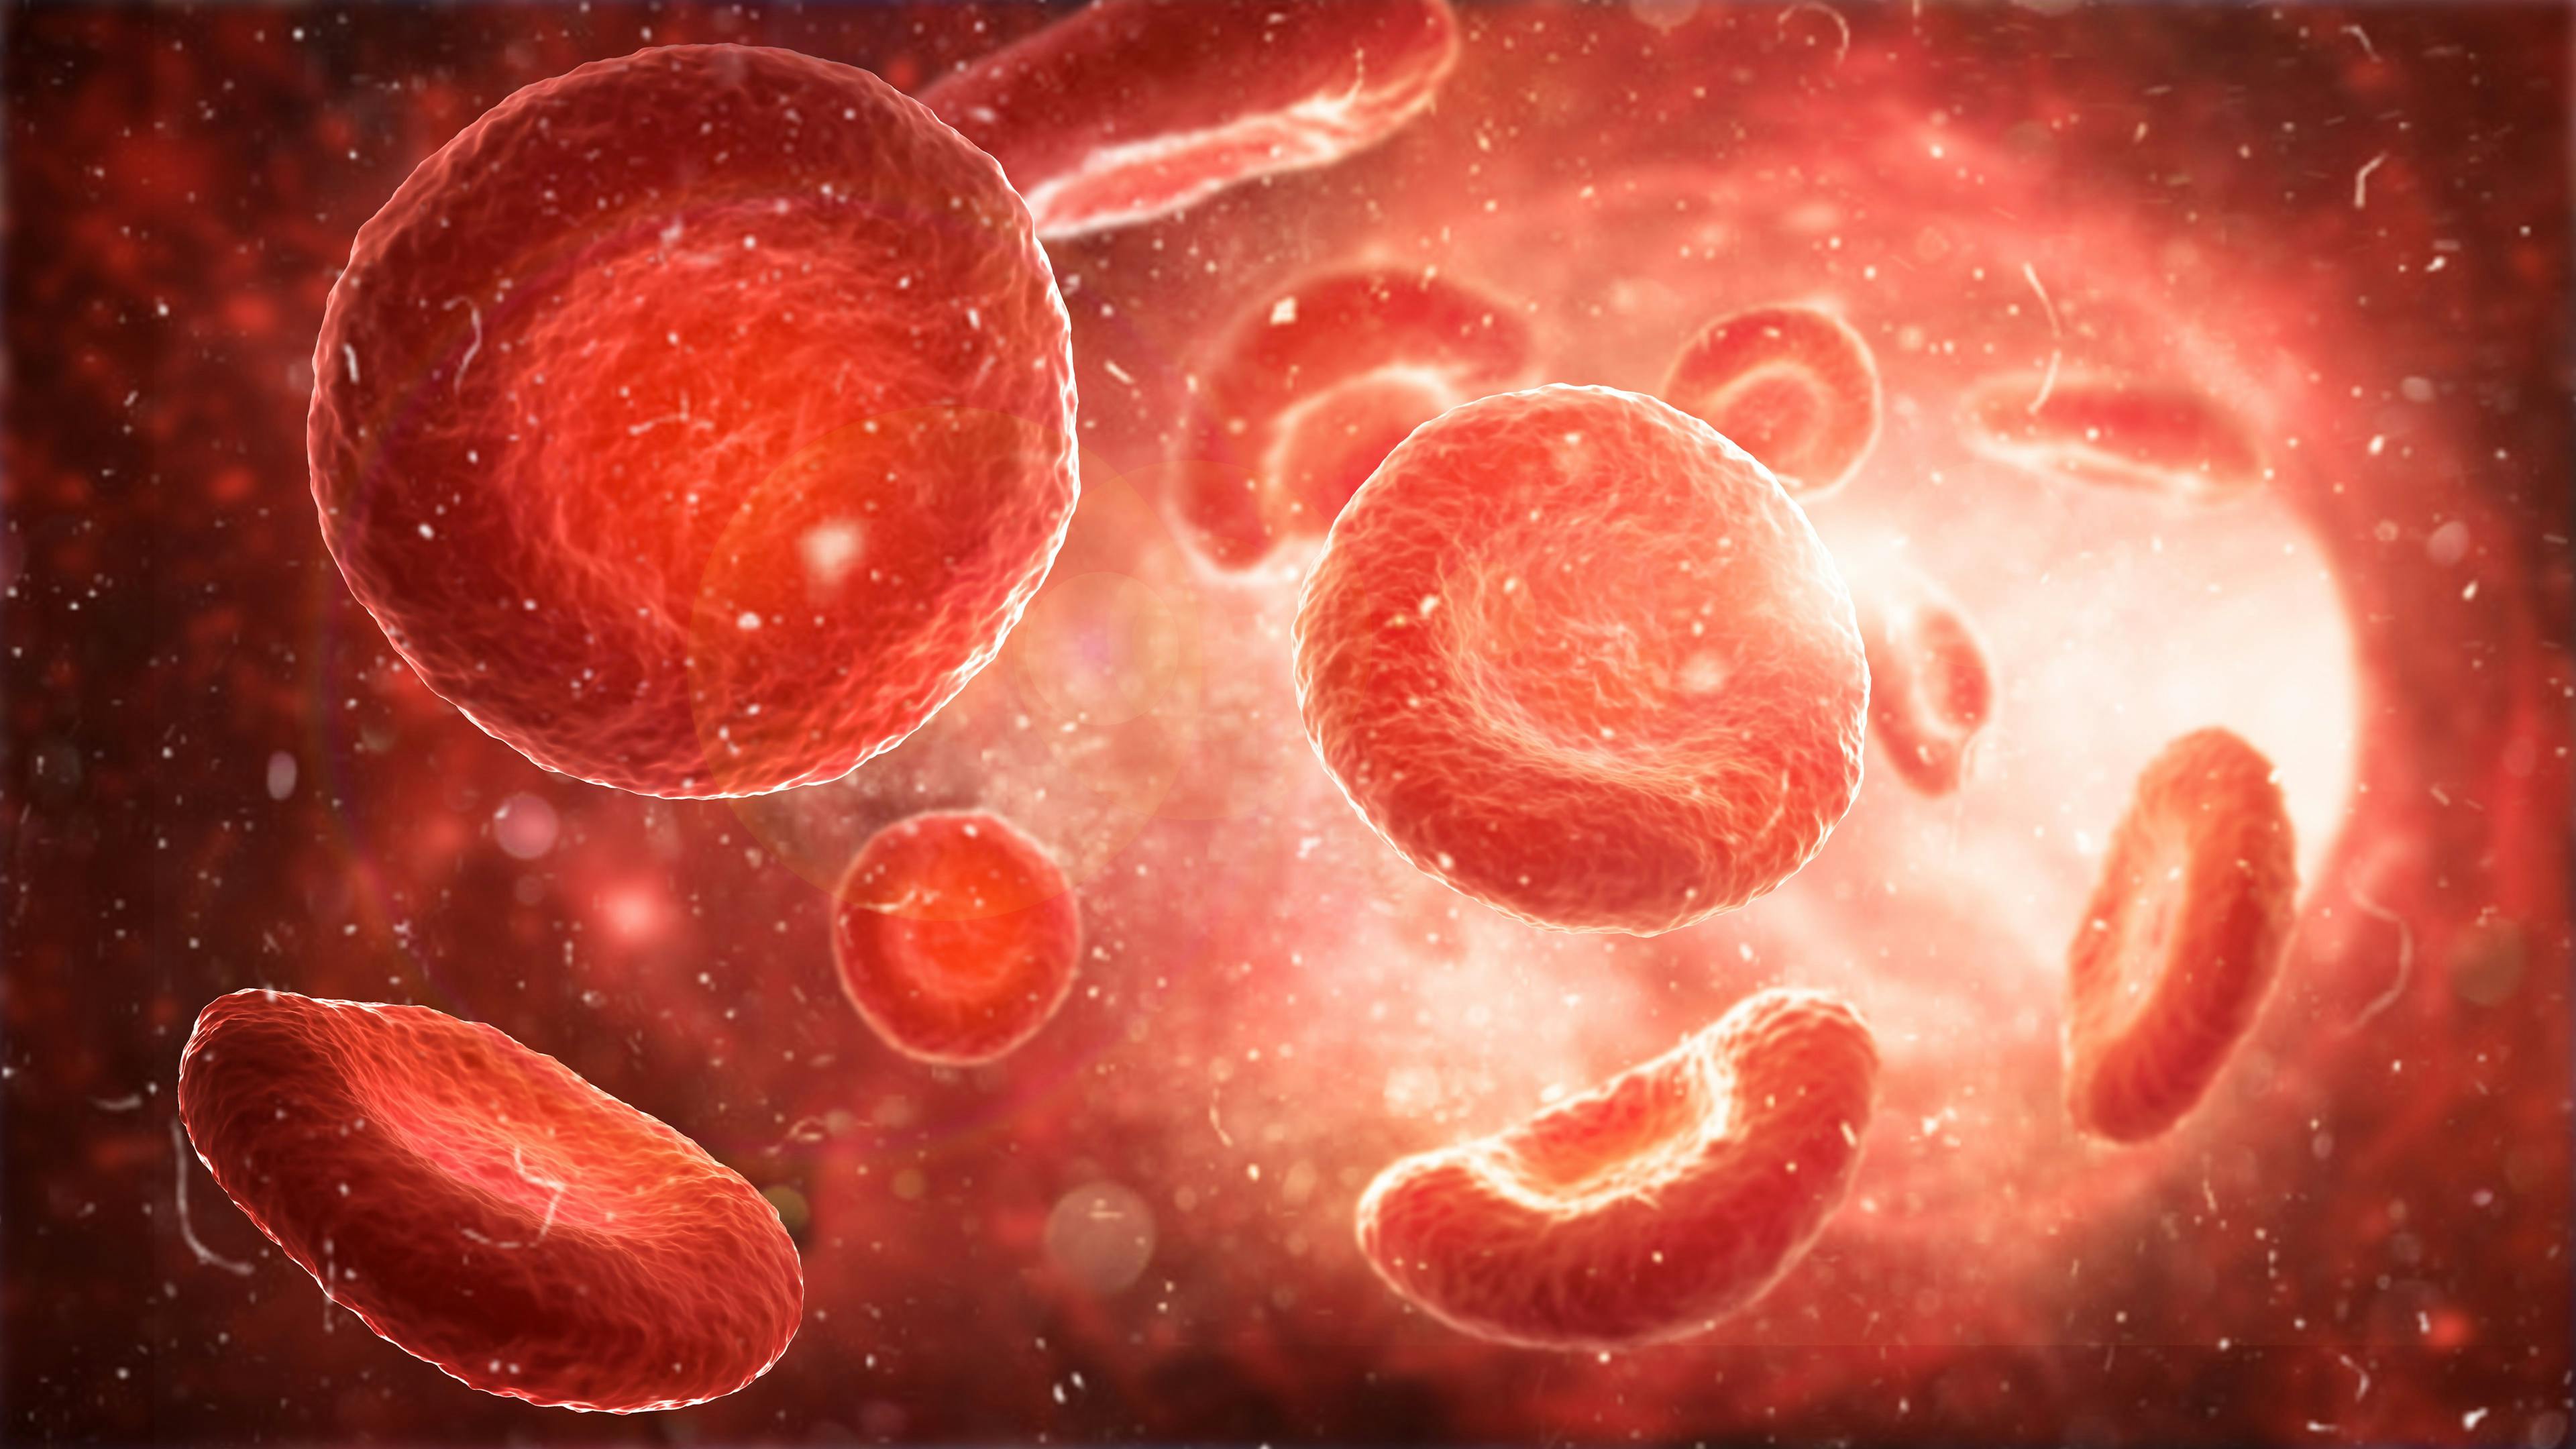 Red blood cells: © vipman4 - stock.adobe.com